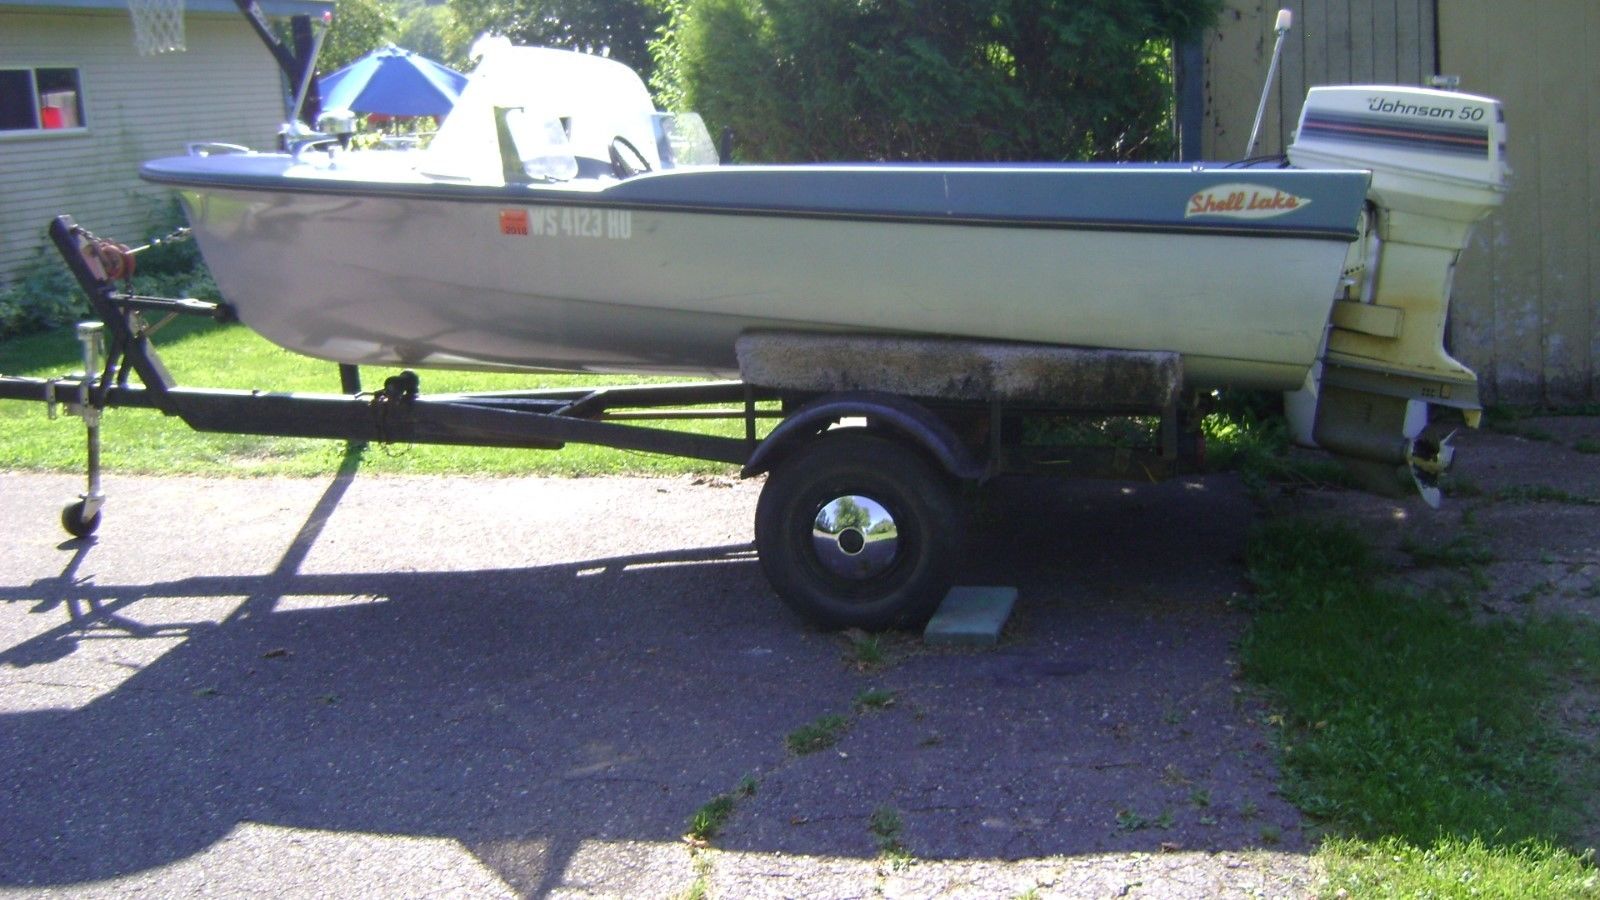 Shell Lake Boat Works Rocket